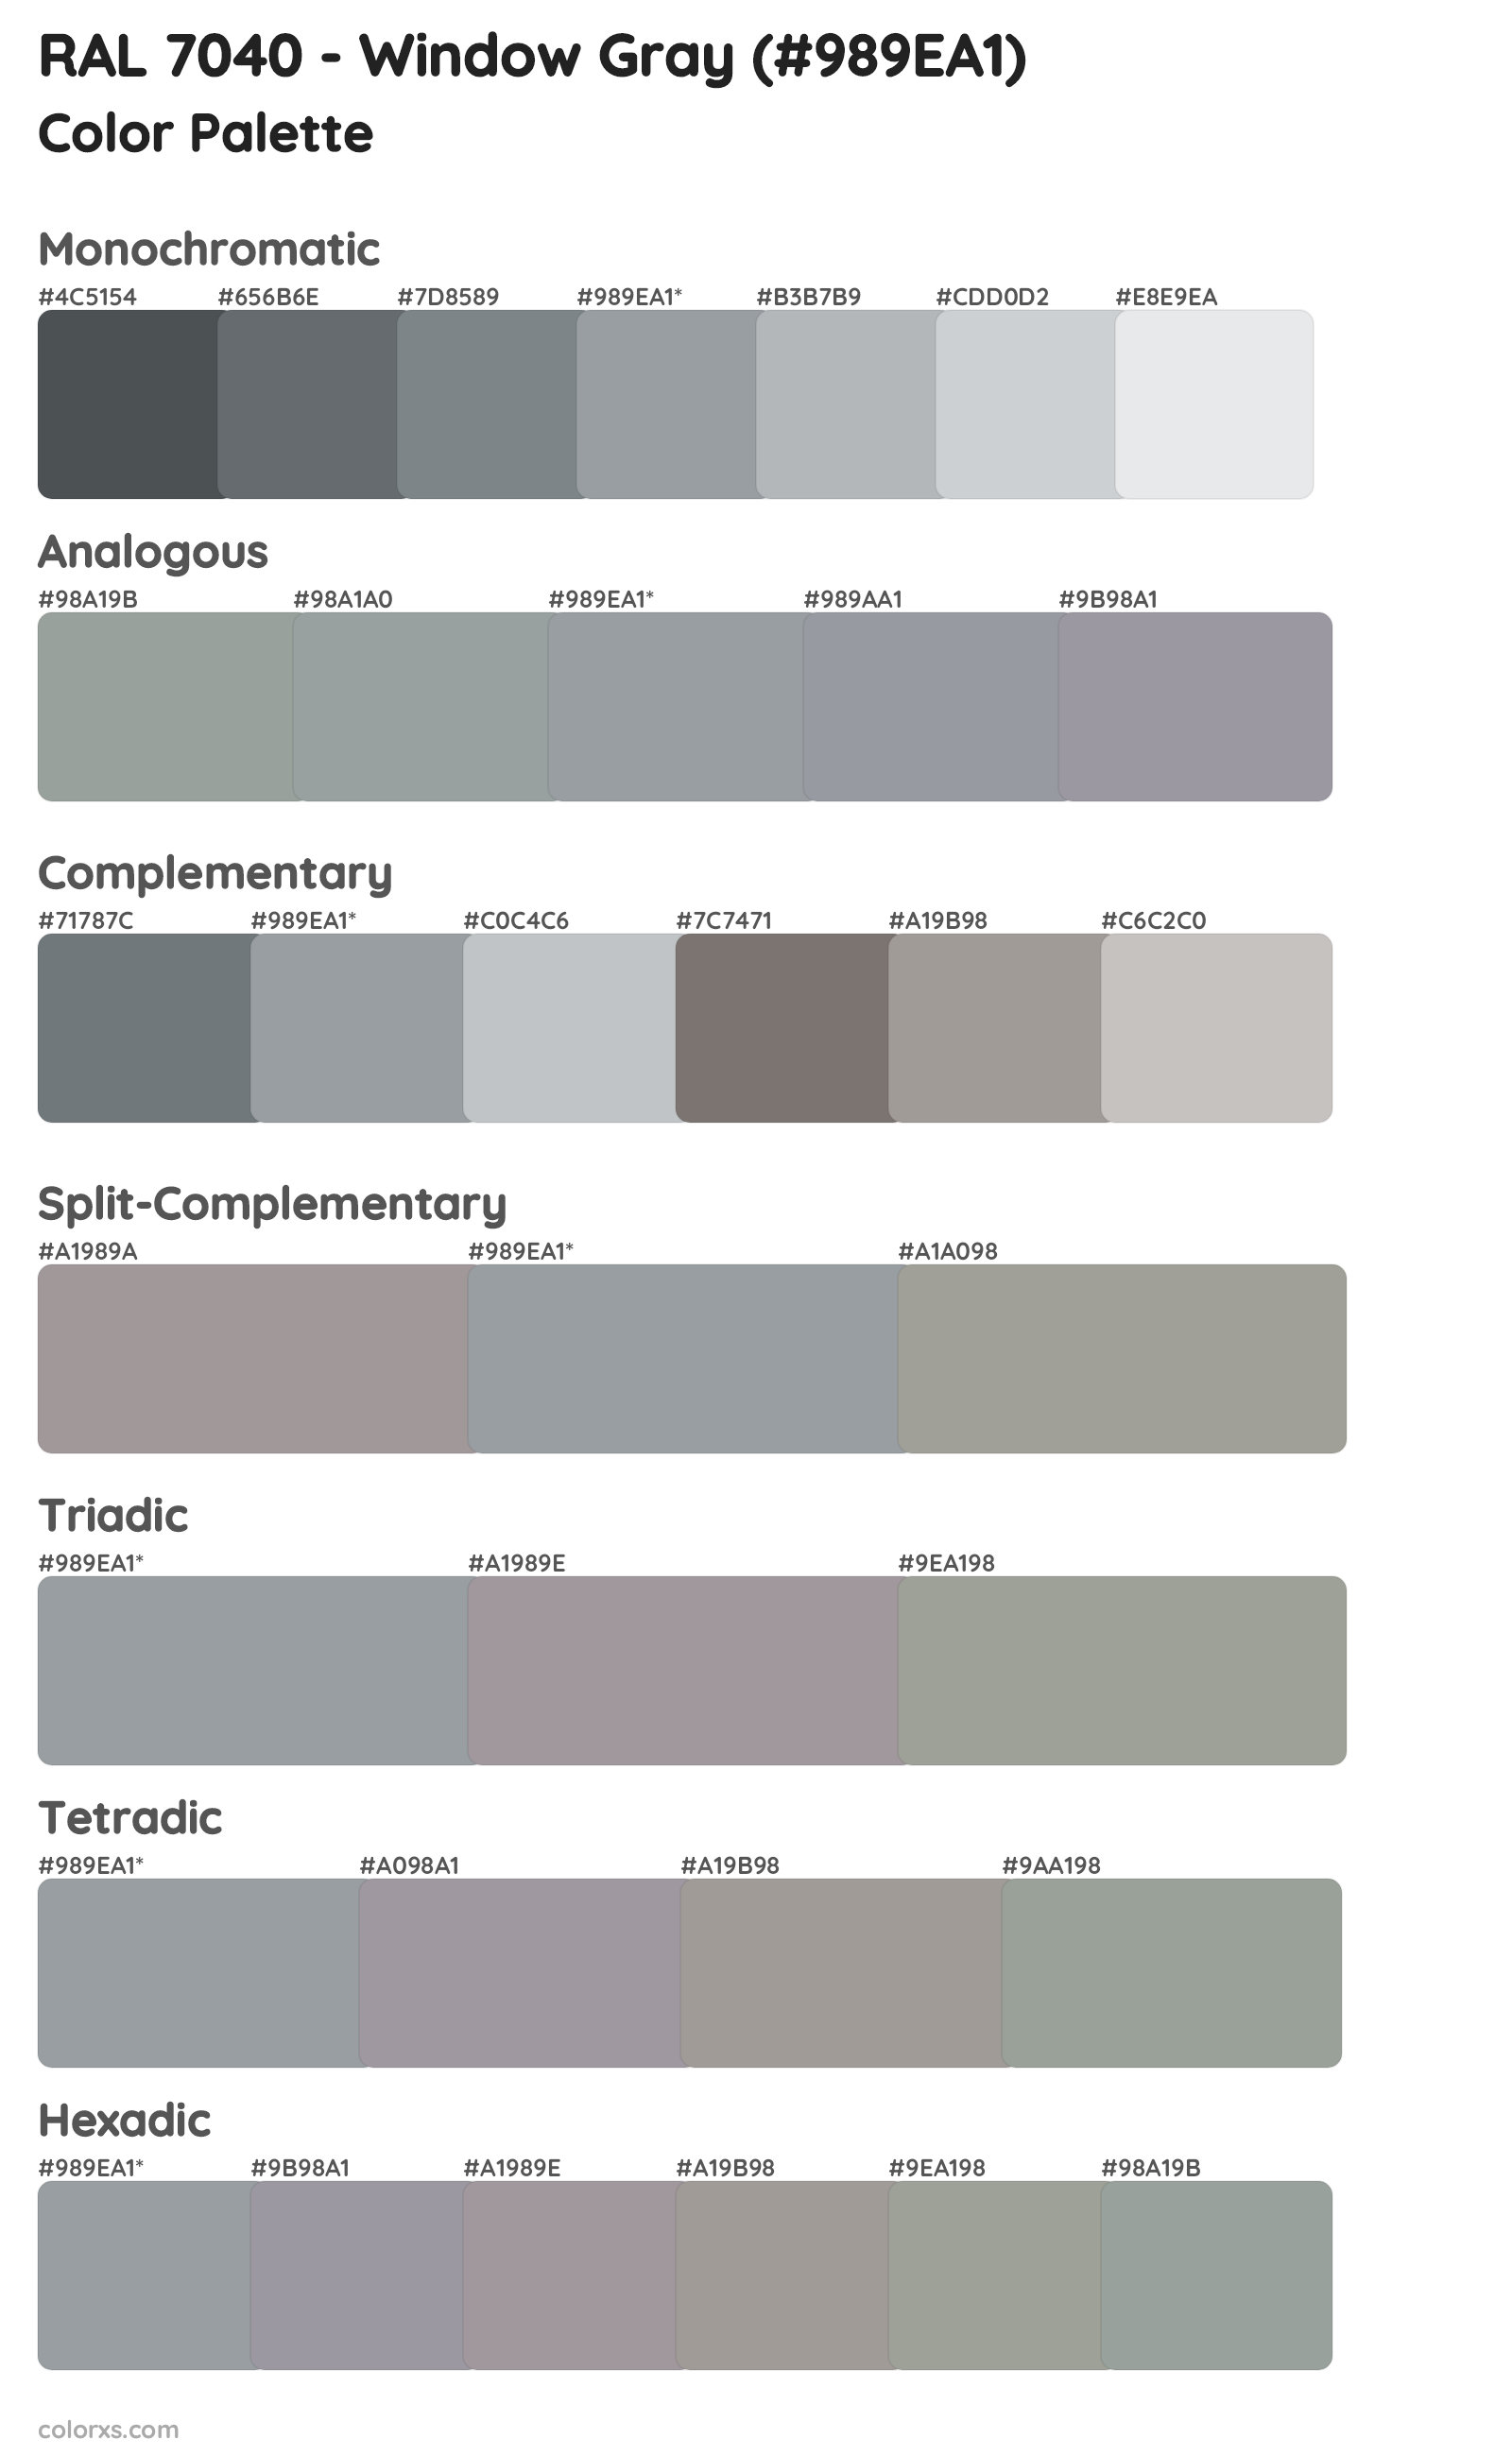 RAL 7040 - Window Gray Color Scheme Palettes